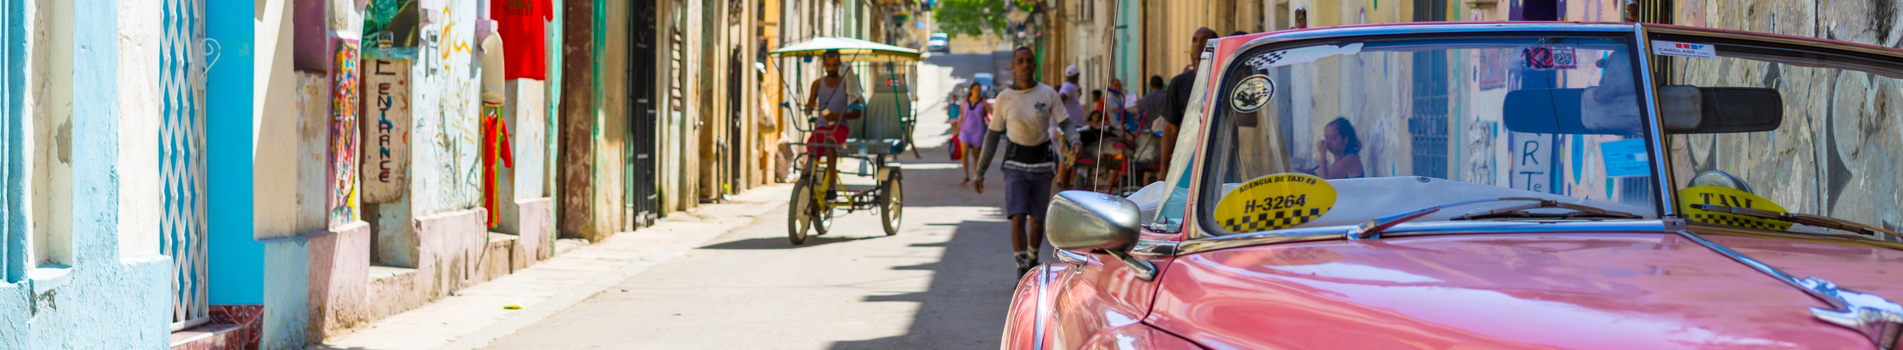 Rondreizen Cuba 18-32 jaar